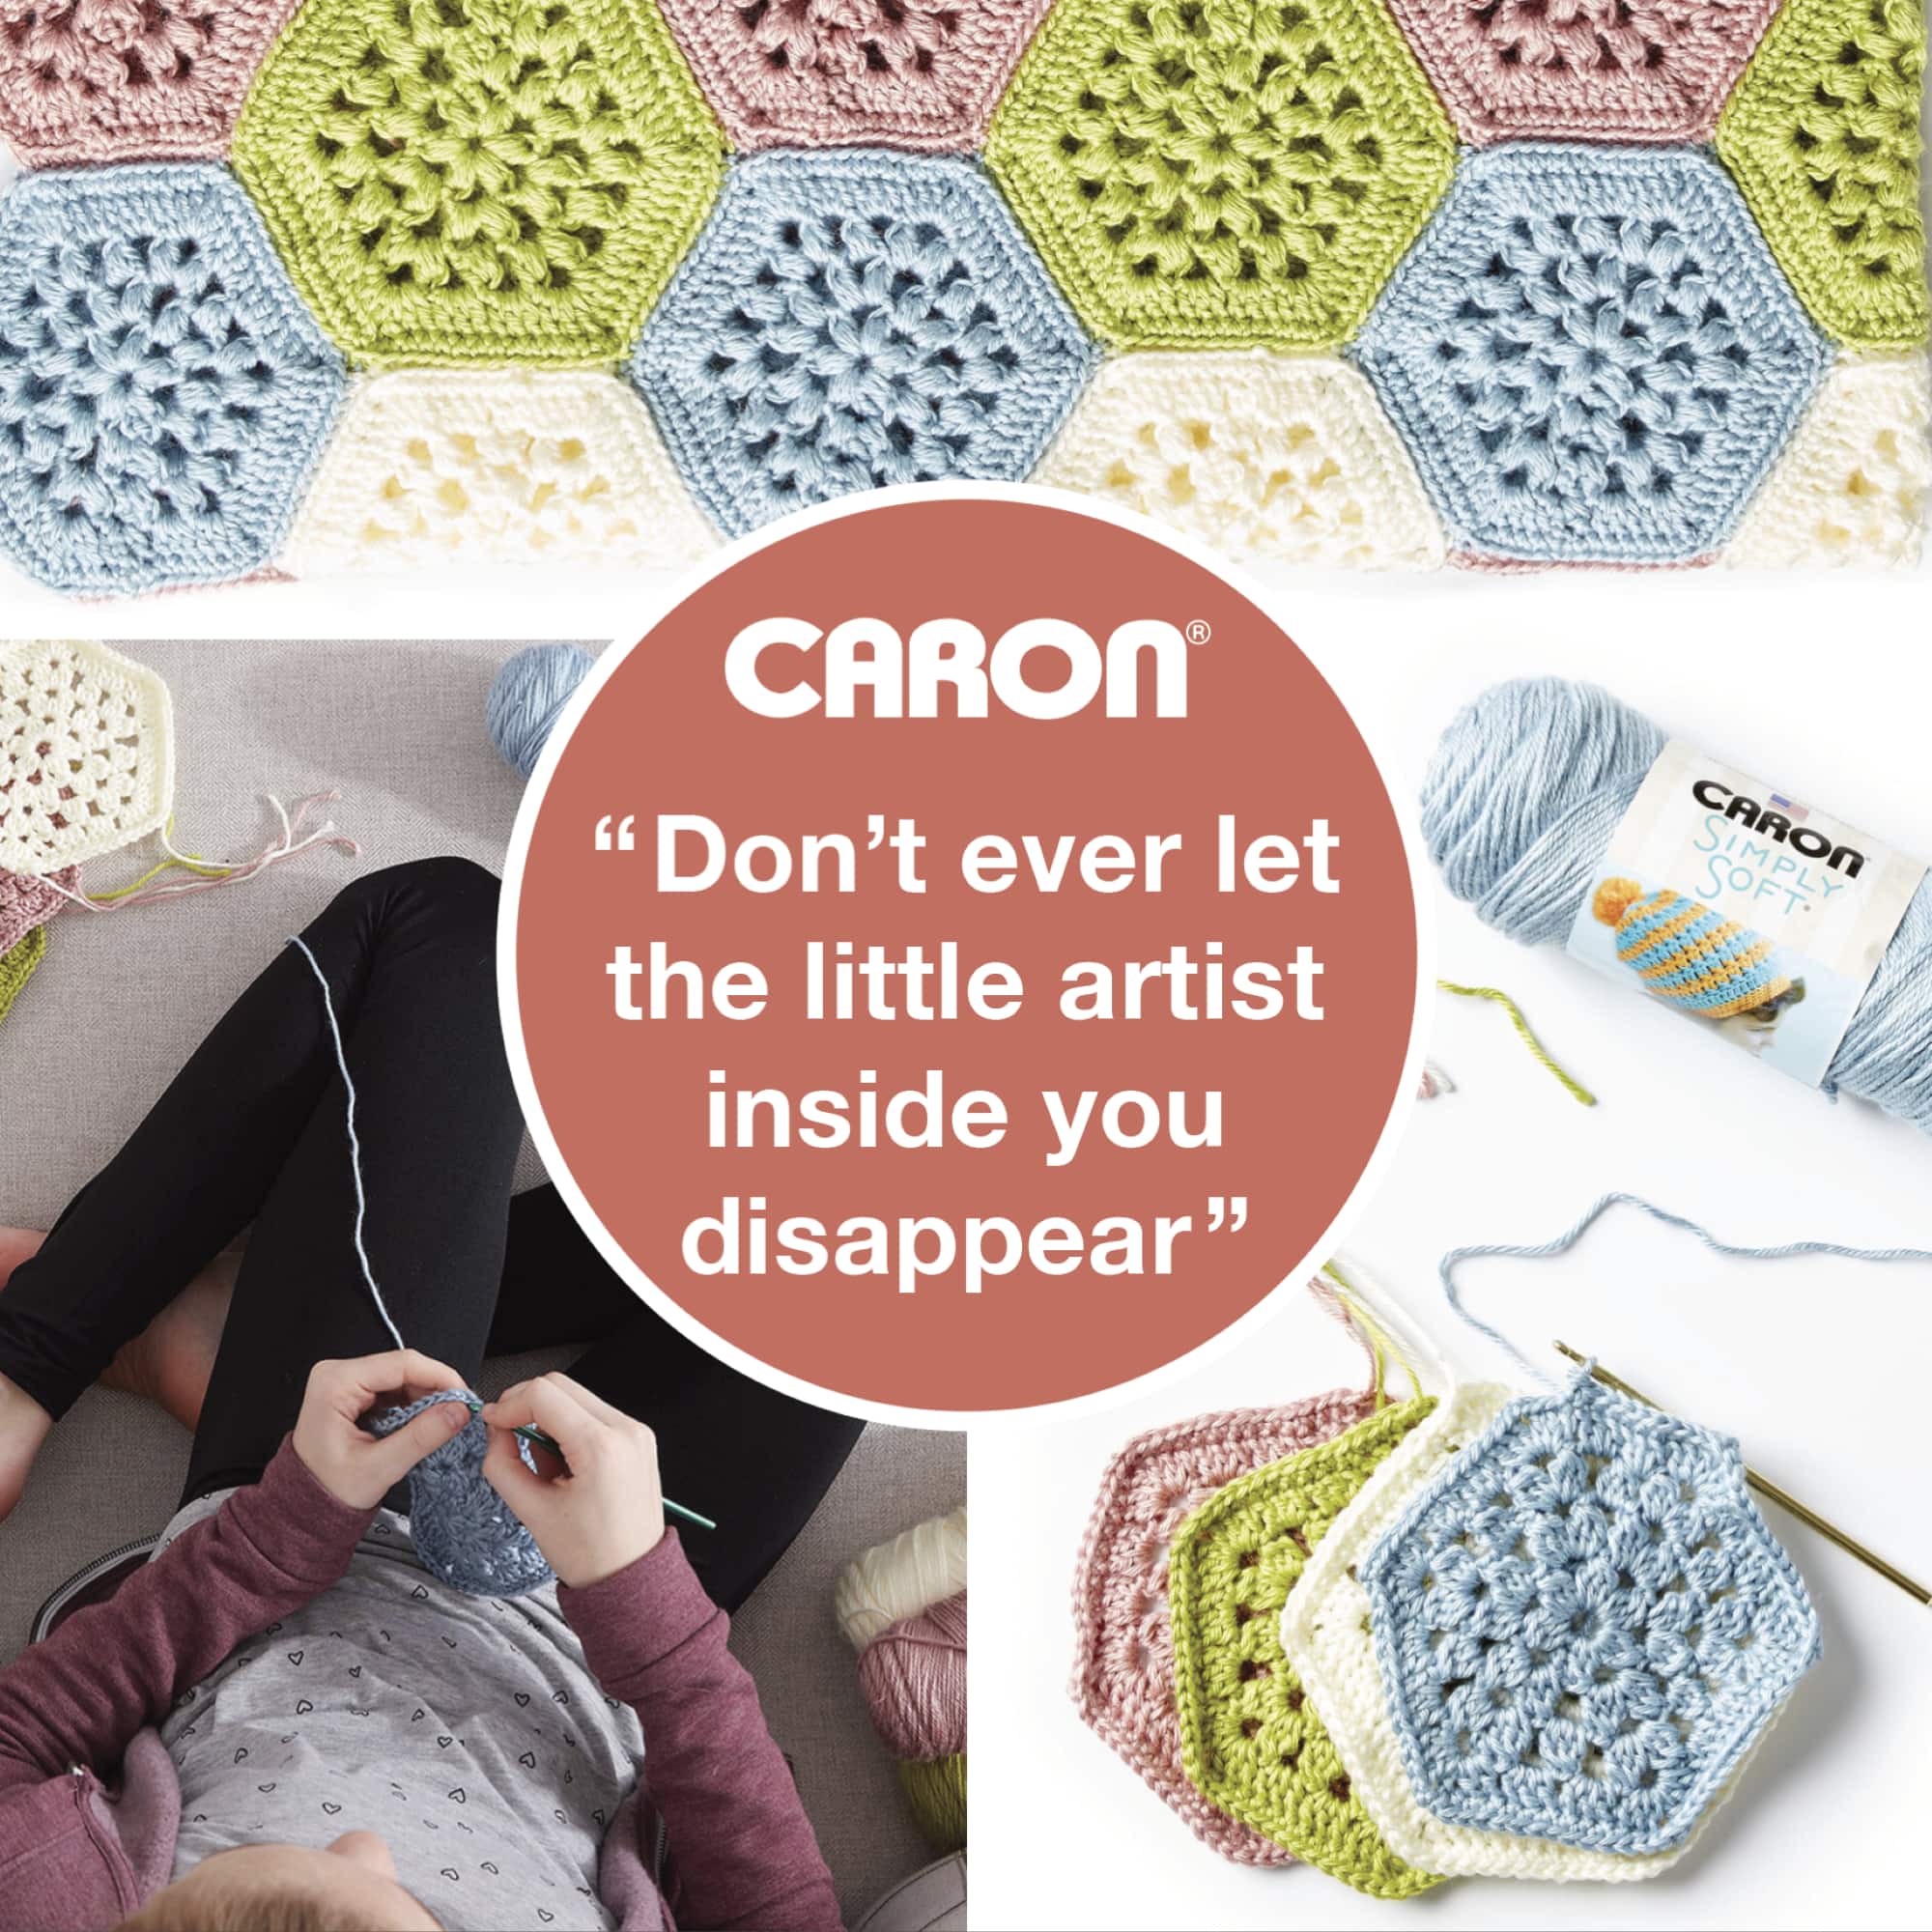 Mini Rant - Caron Cinnamon Swirl cakes getting on my last nerve! : r/crochet